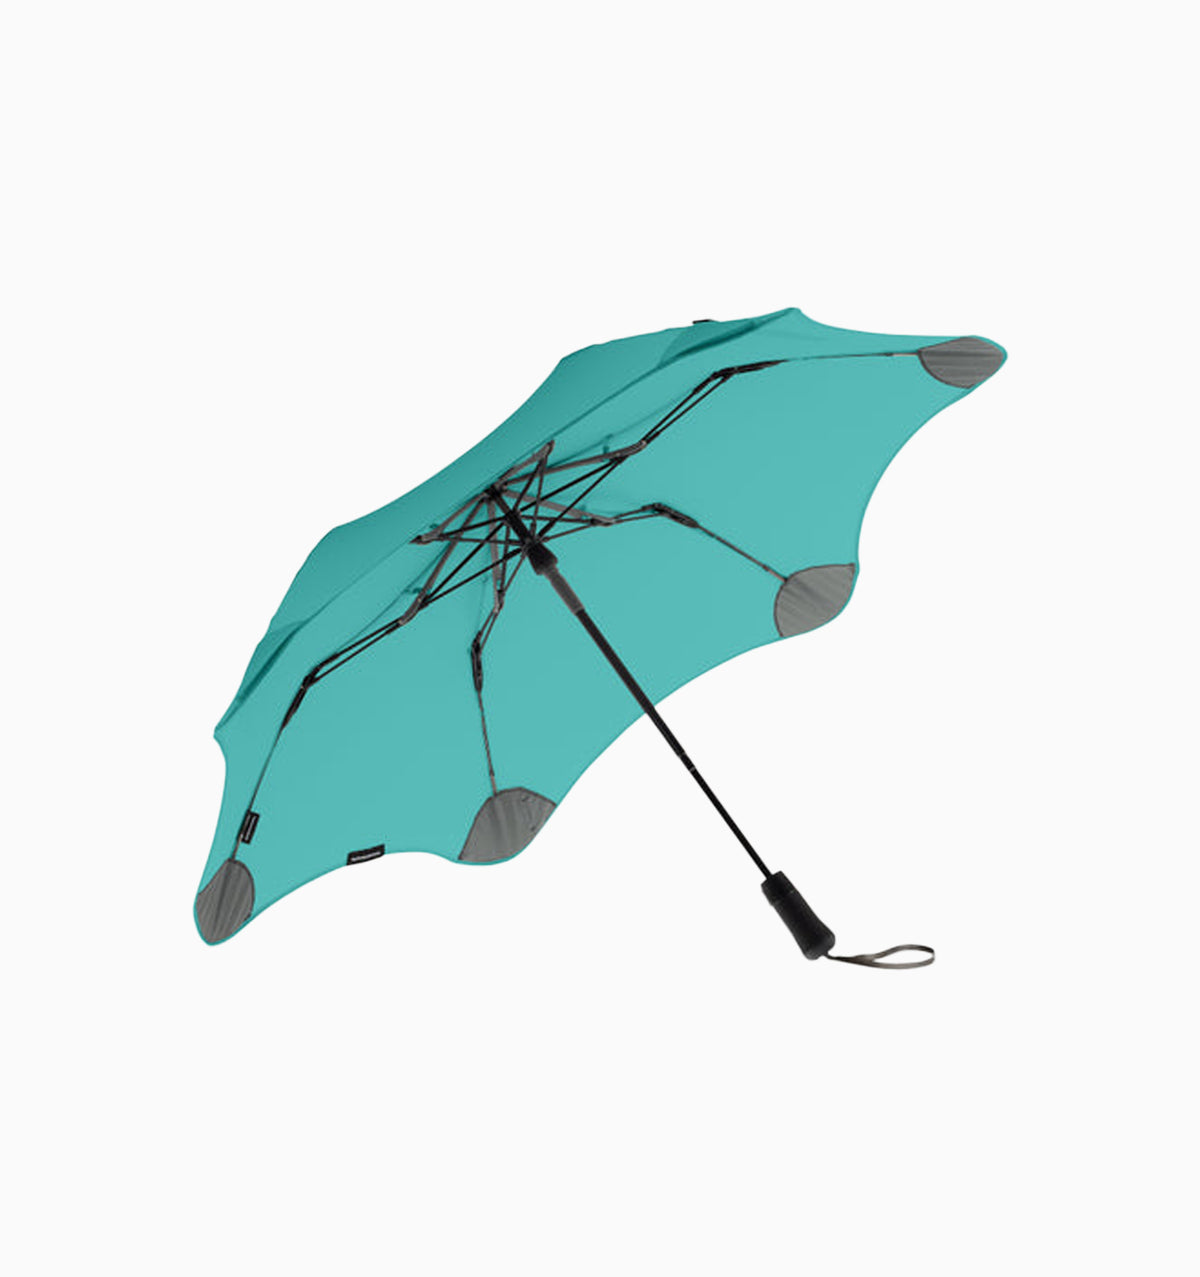 Blunt Metro Umbrella - Mint